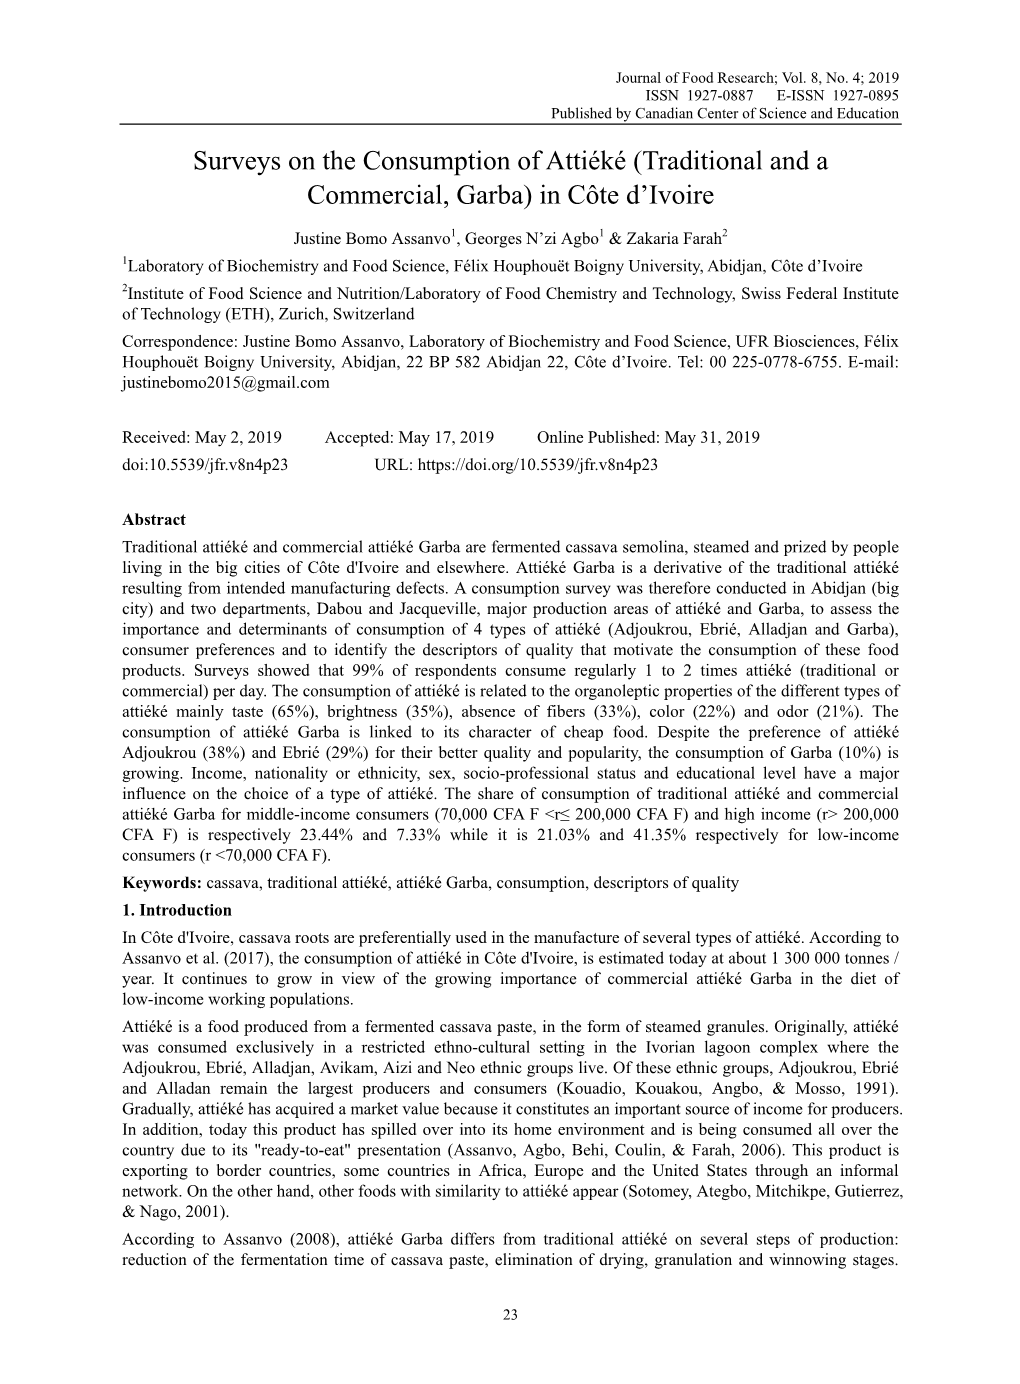 Surveys on the Consumption of Attiéké (Traditional and a Commercial, Garba) in Côte D’Ivoire